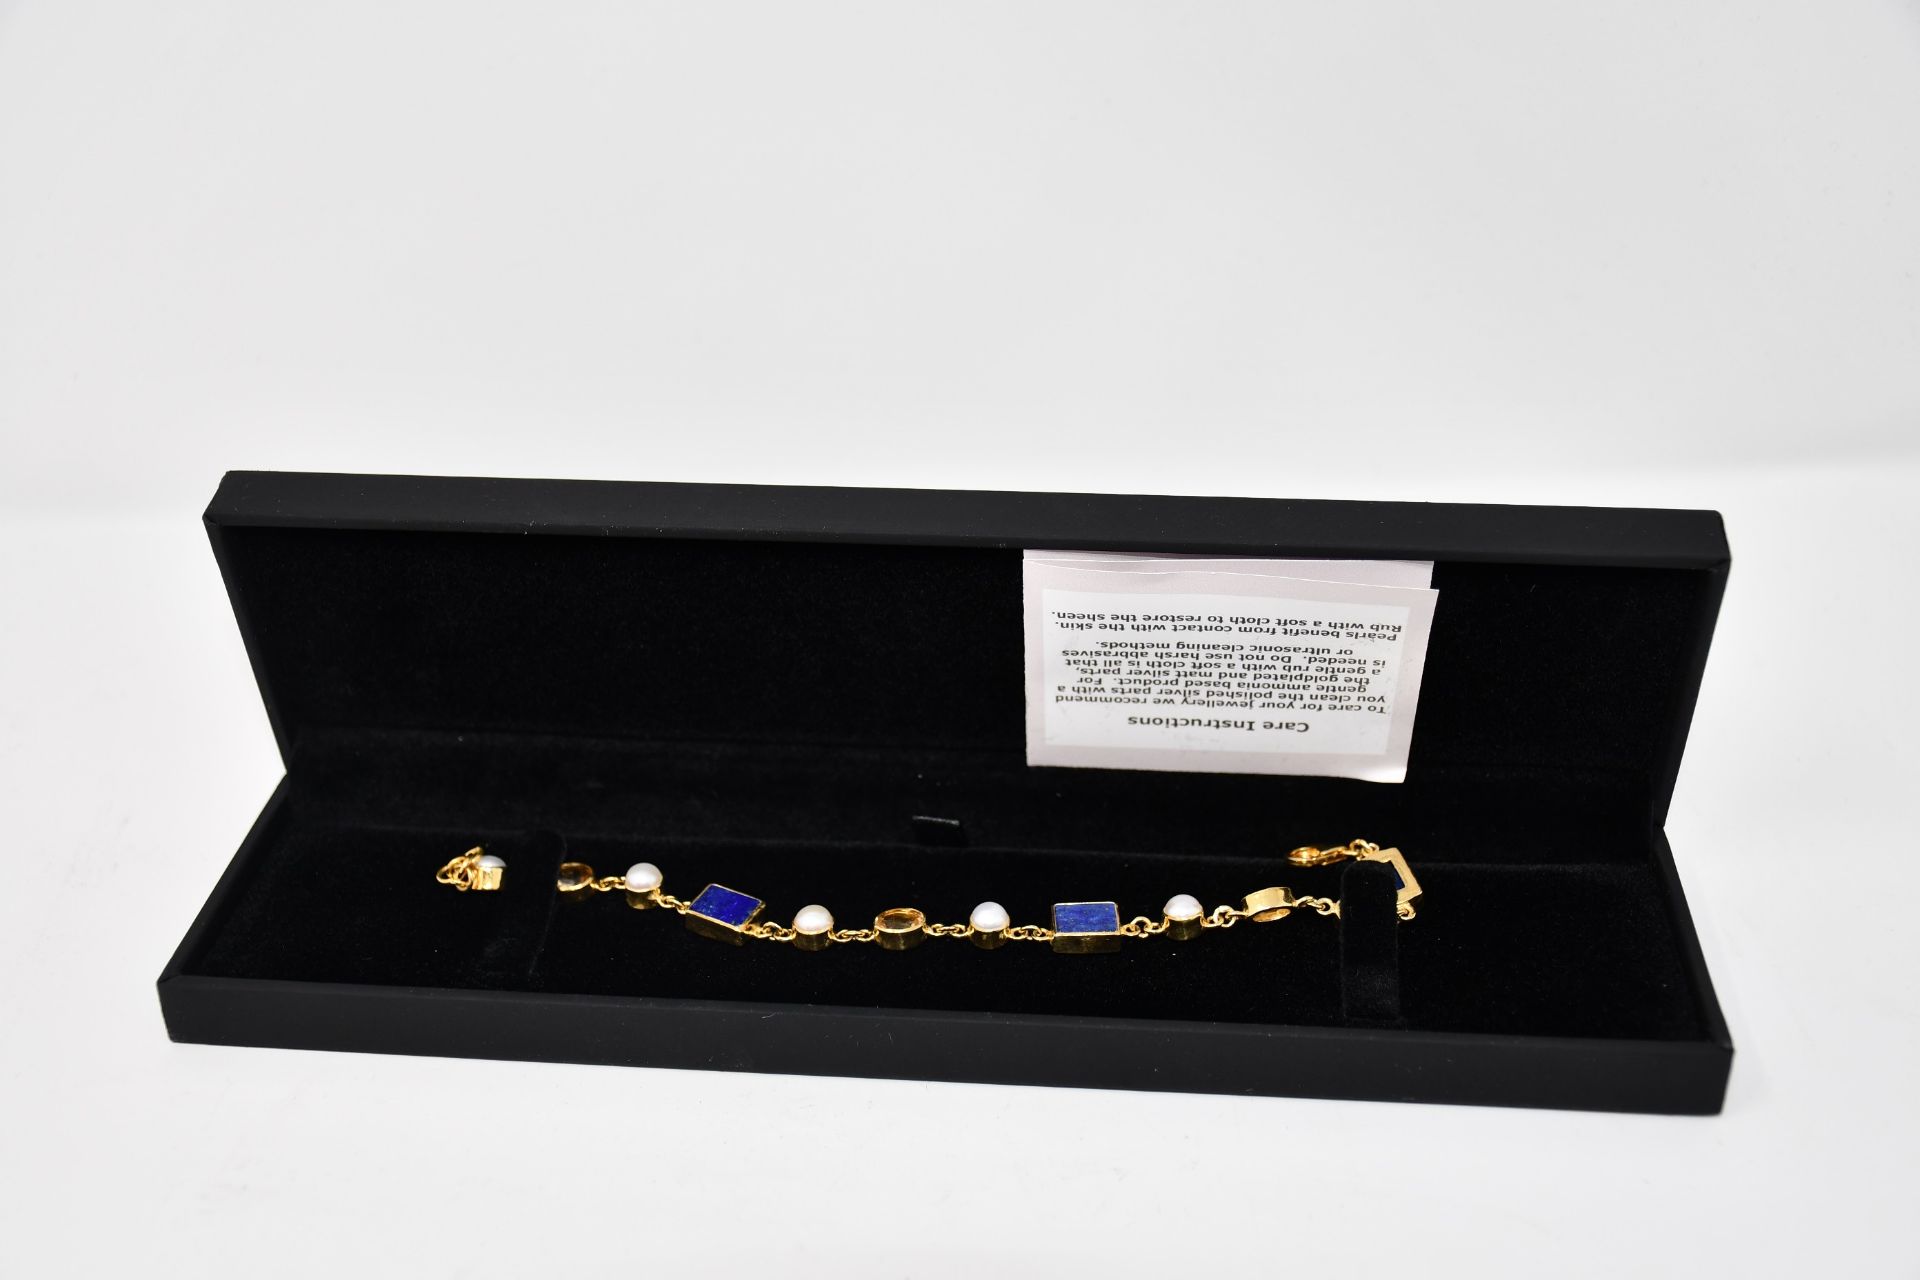 One lady's boxed as new Paula Bolton Vermeer bracelet.